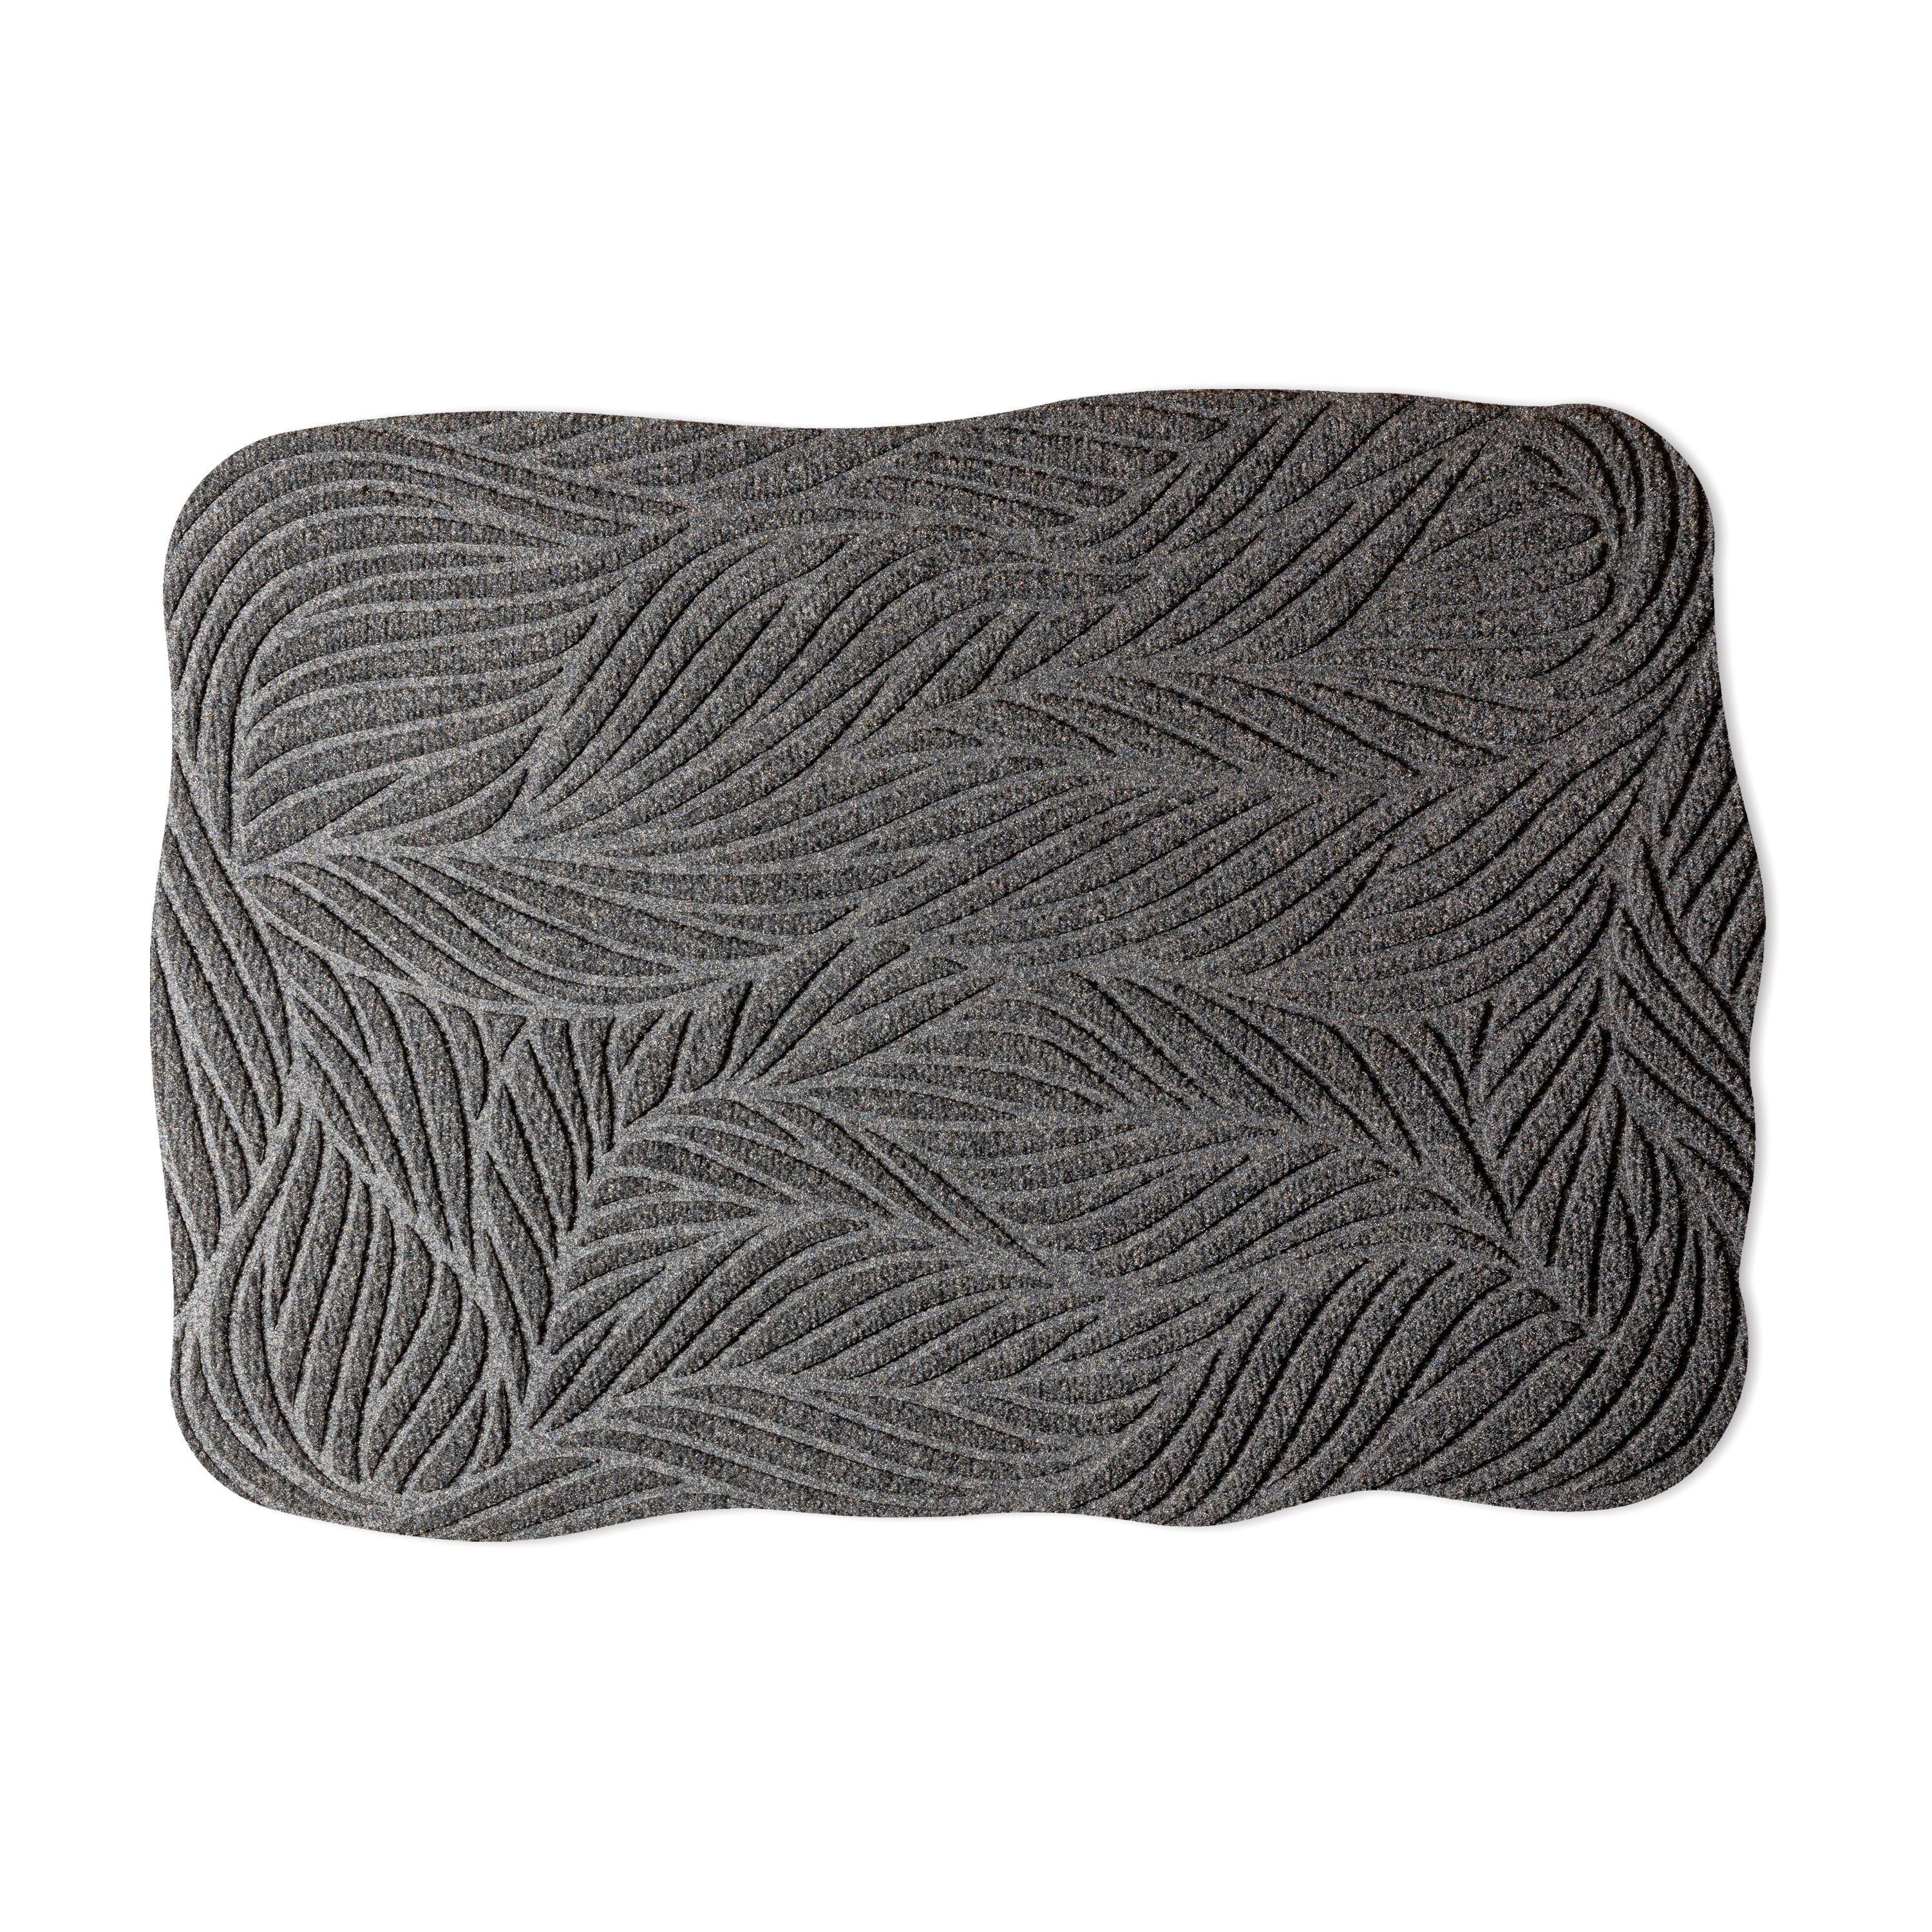 Heymat Twine Doormat, Grey